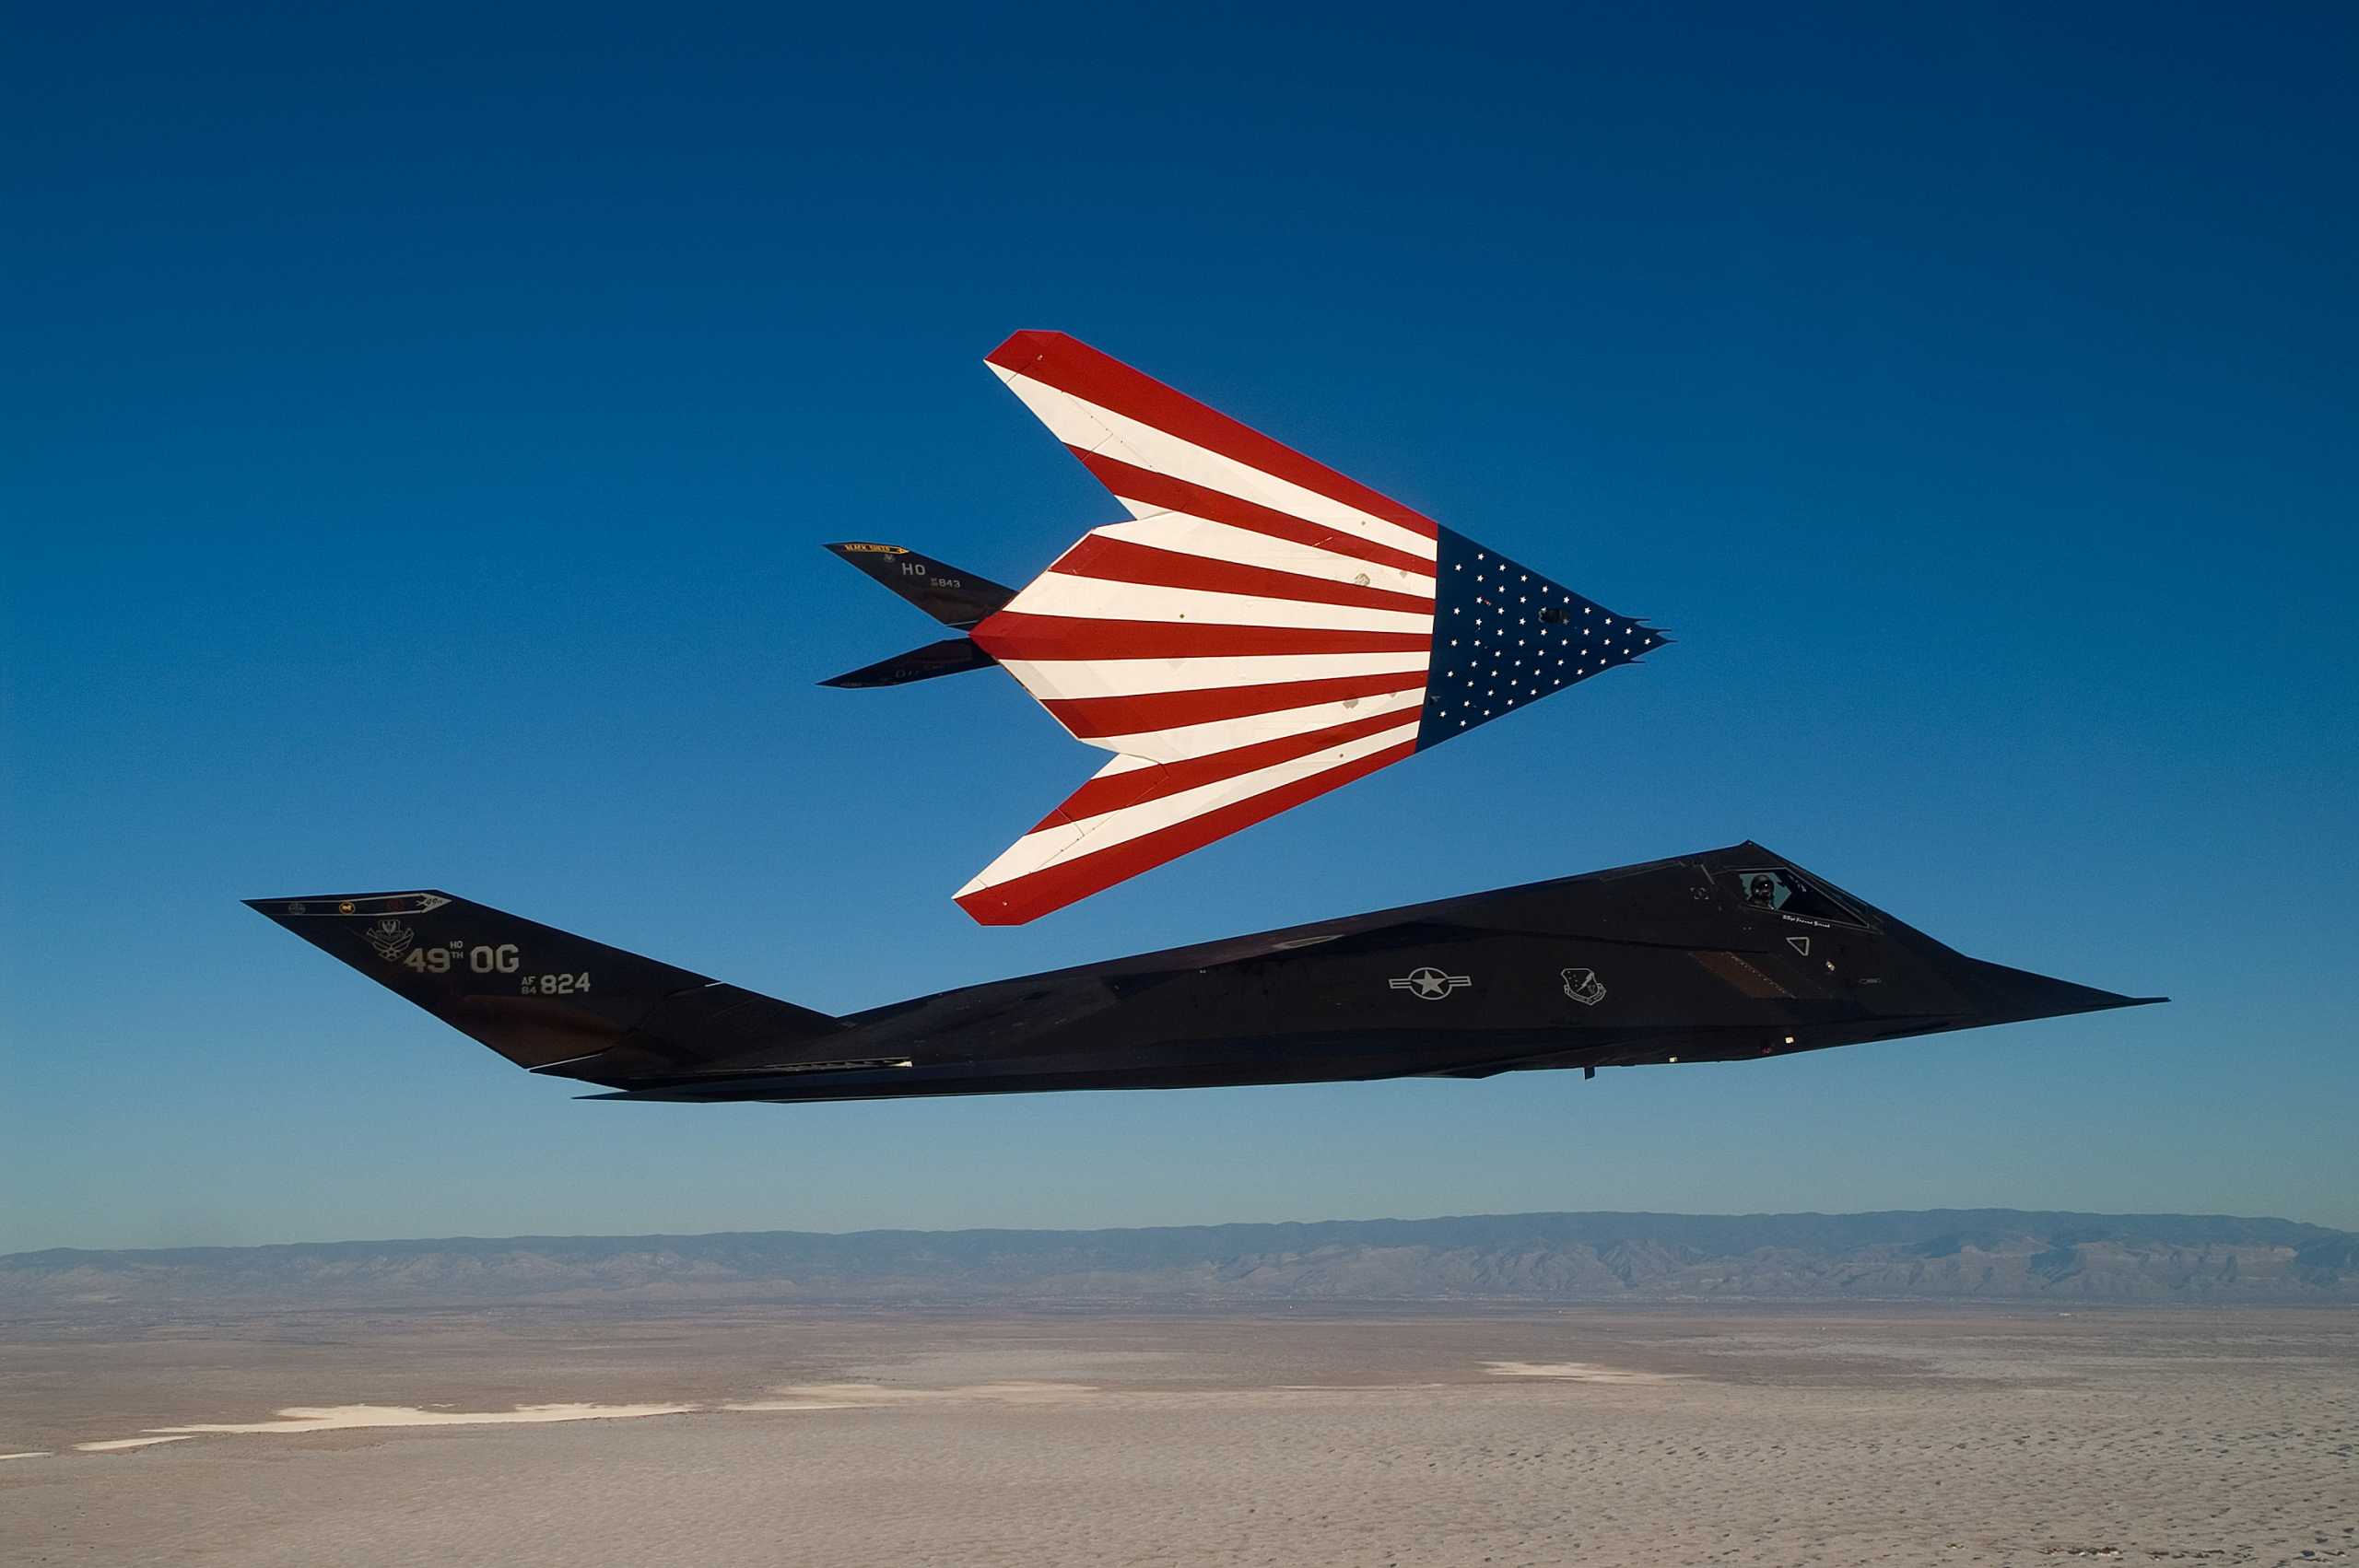 F-117: Ποια απόσυρση; Αποκαλυπτικές εικόνες από τα ιστορικά και μυστηριώδη stealth αεροσκάφη των ΗΠΑ [pic]